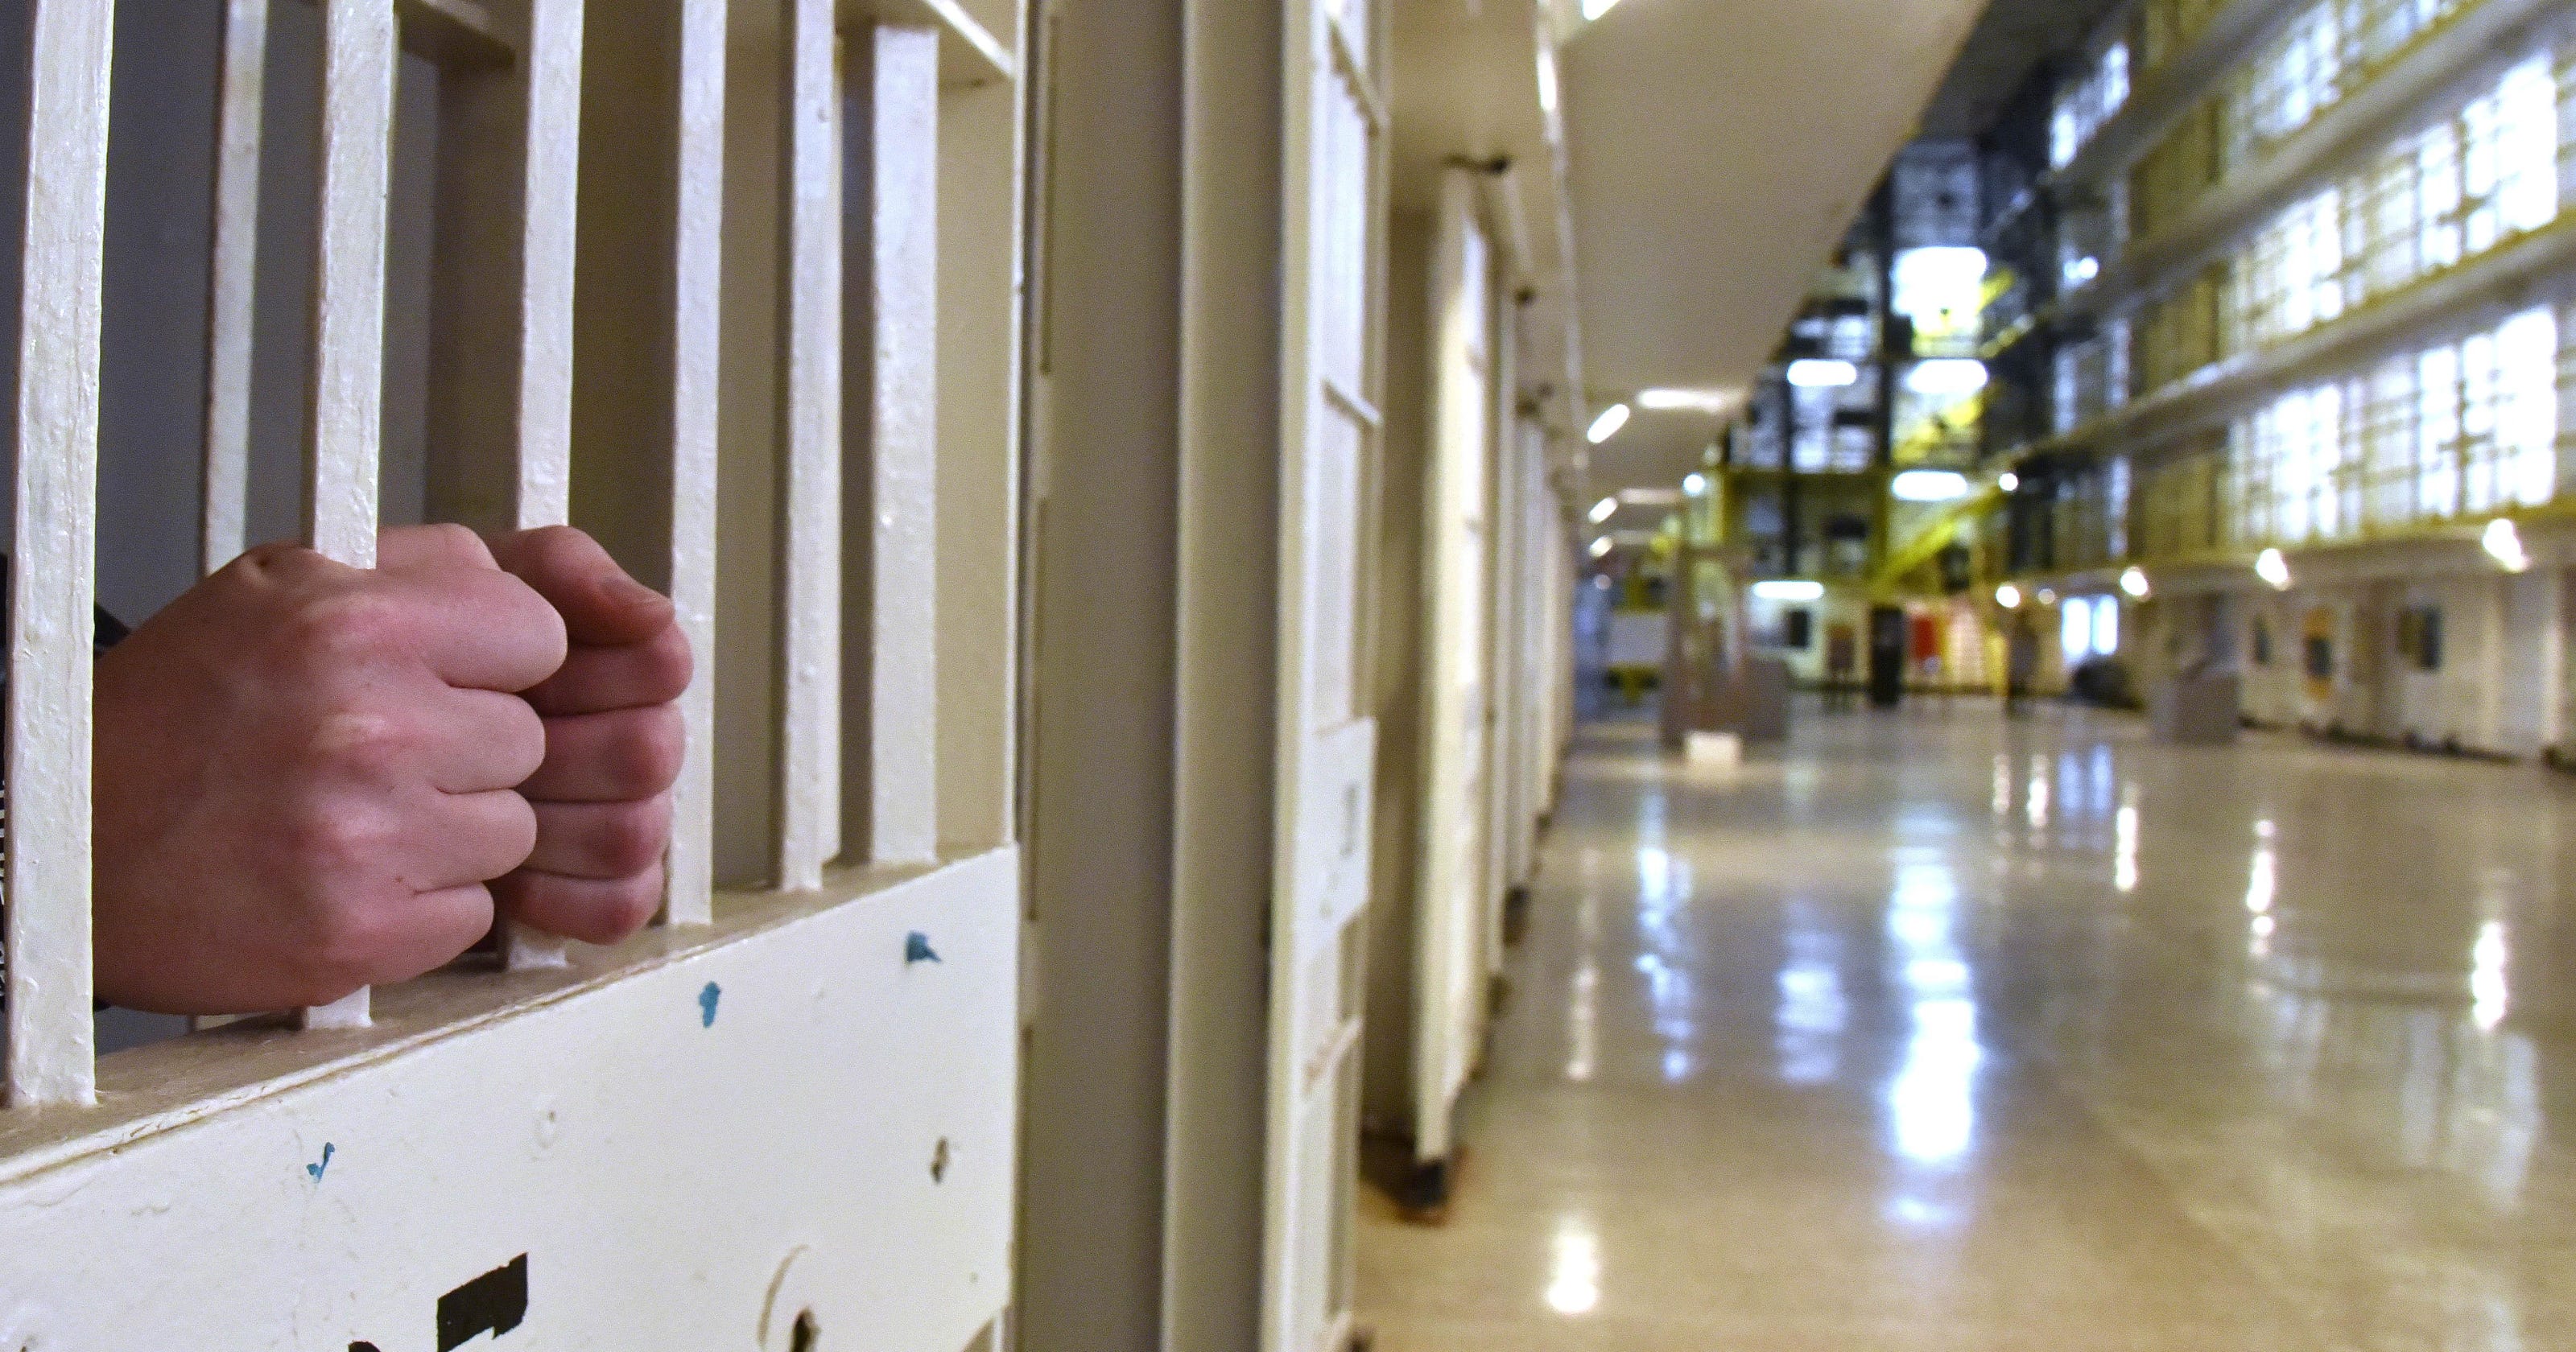 Officials seek cause of rash at Michigan women’s prison